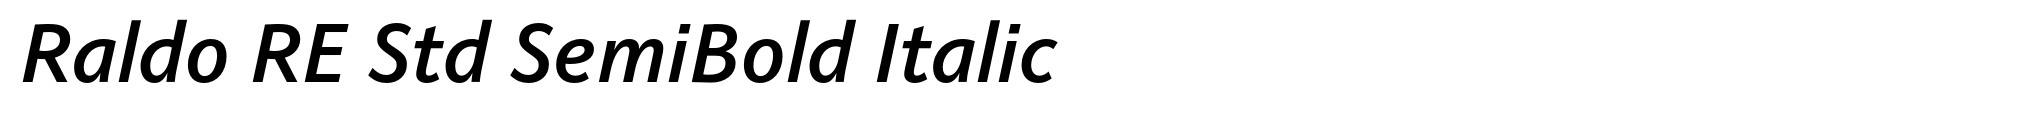 Raldo RE Std SemiBold Italic image